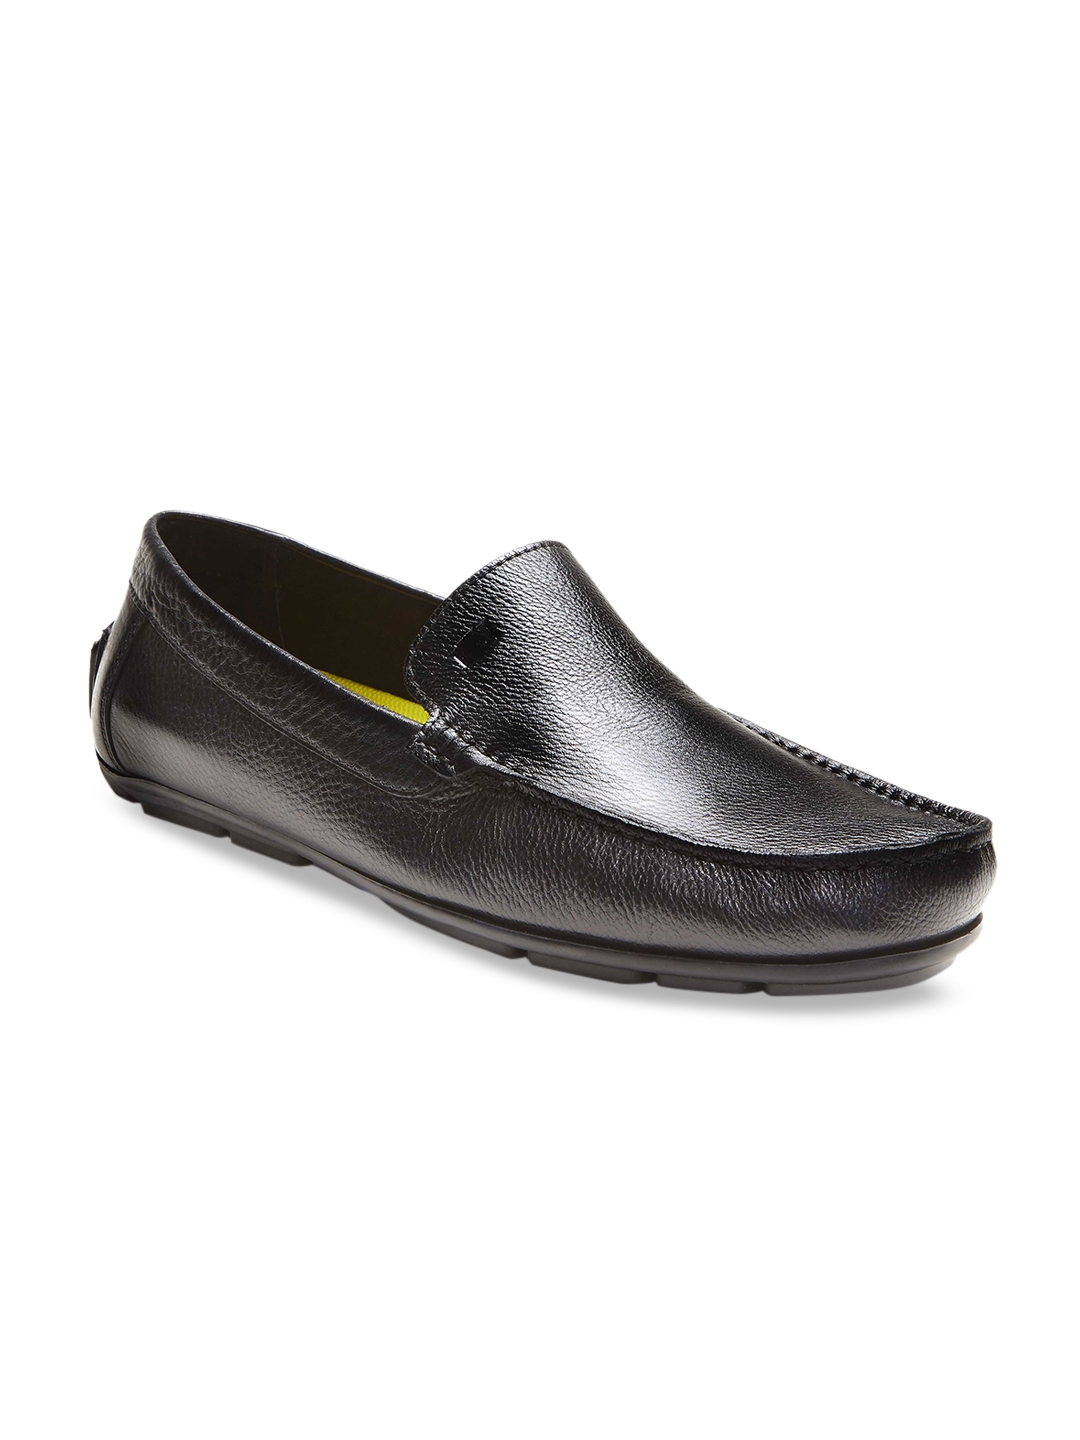 Buy Florsheim Men Black Loafers - Casual Shoes for Men 12145350 | Myntra